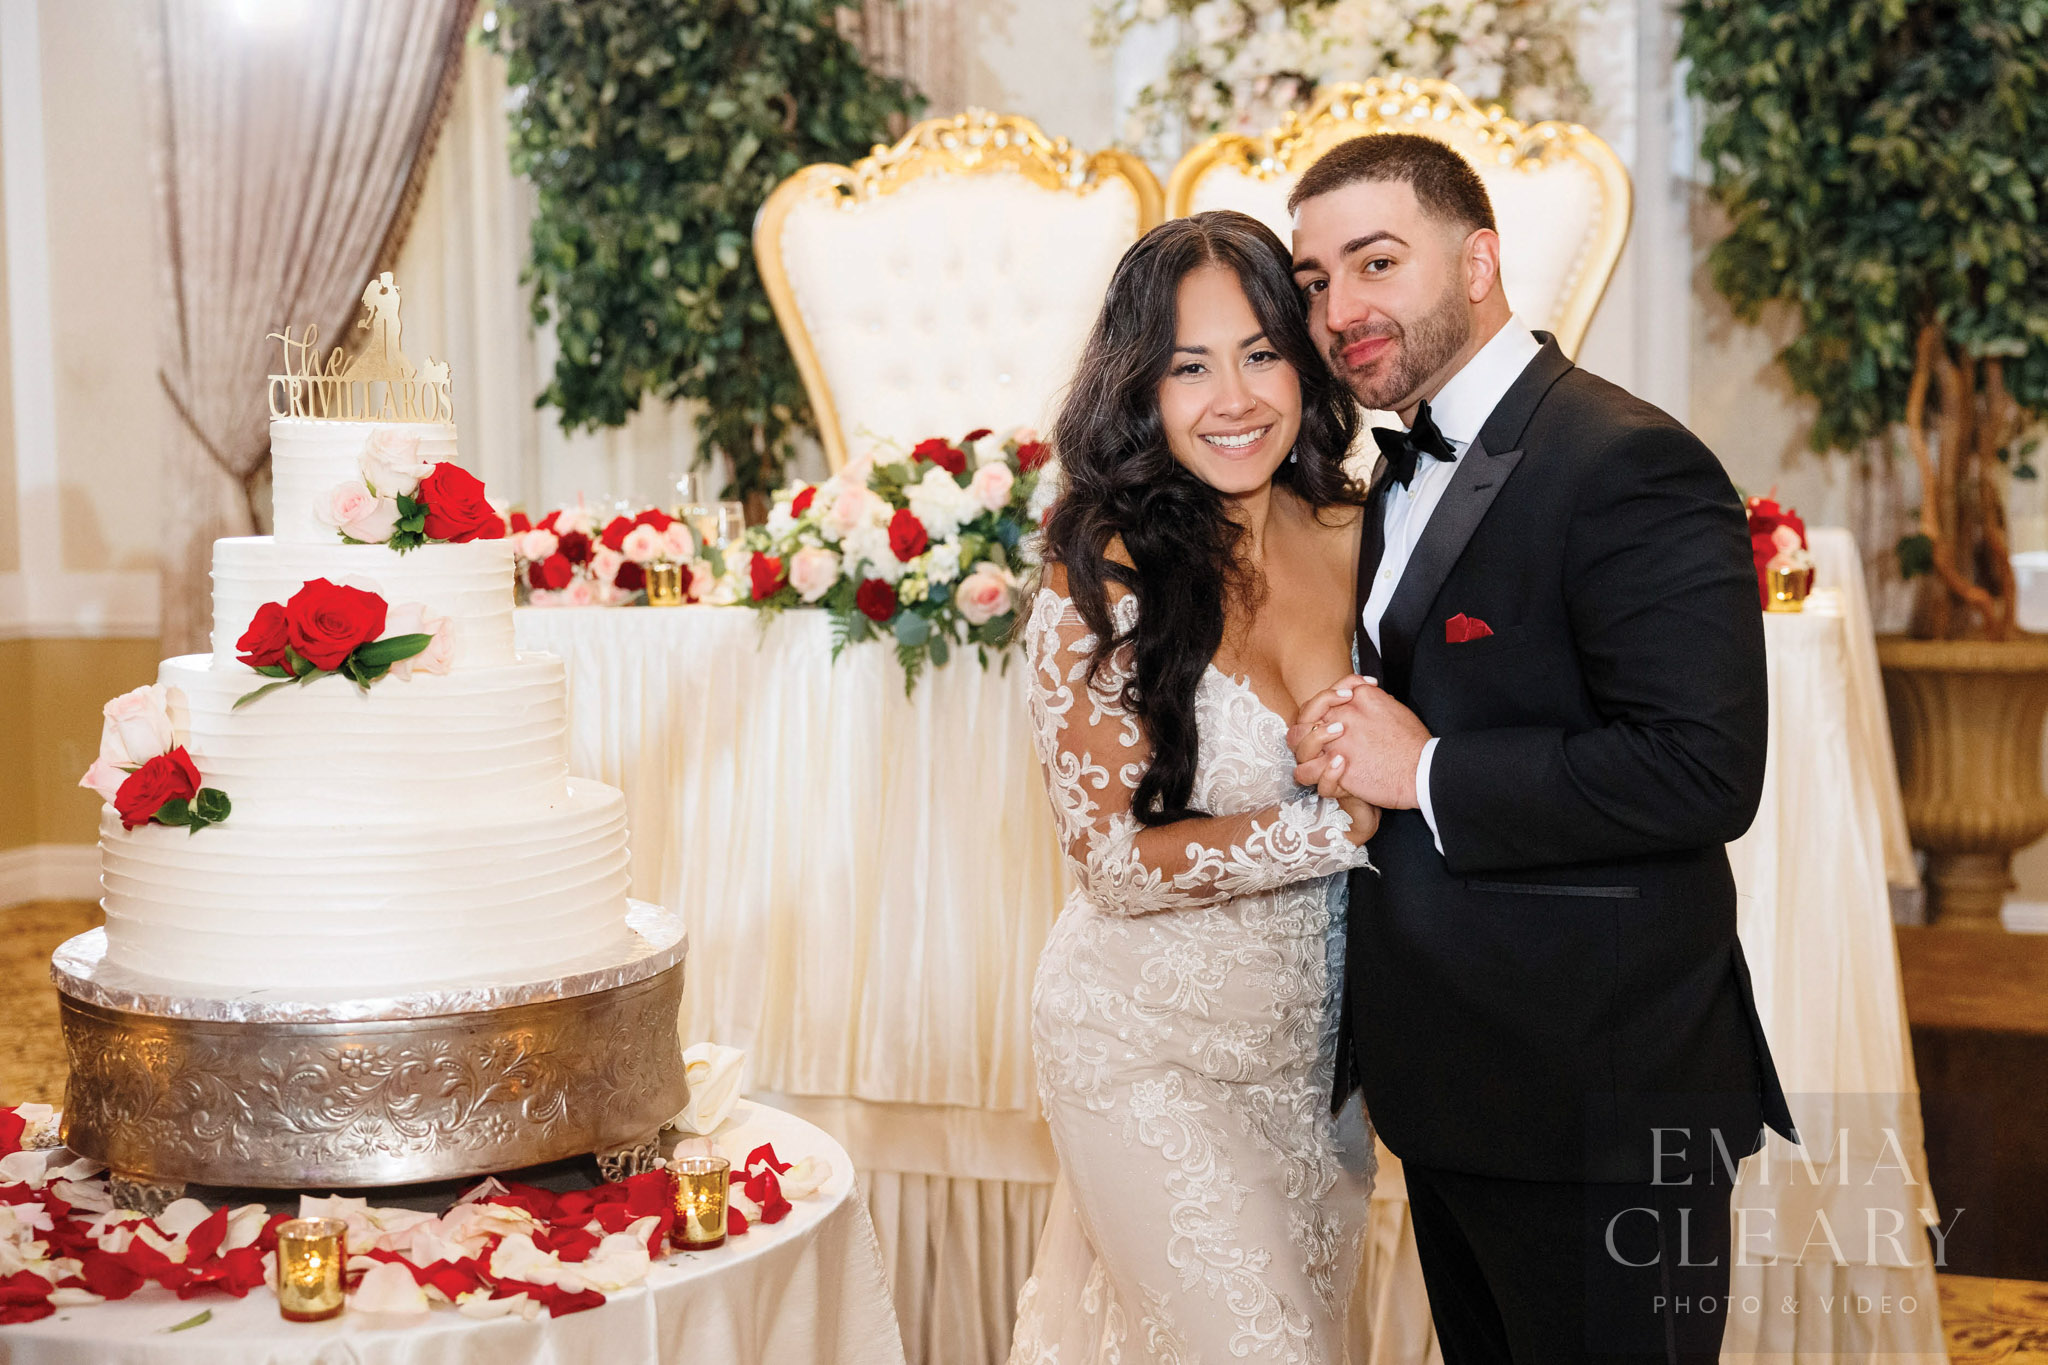 Wedding cake, bride and groom